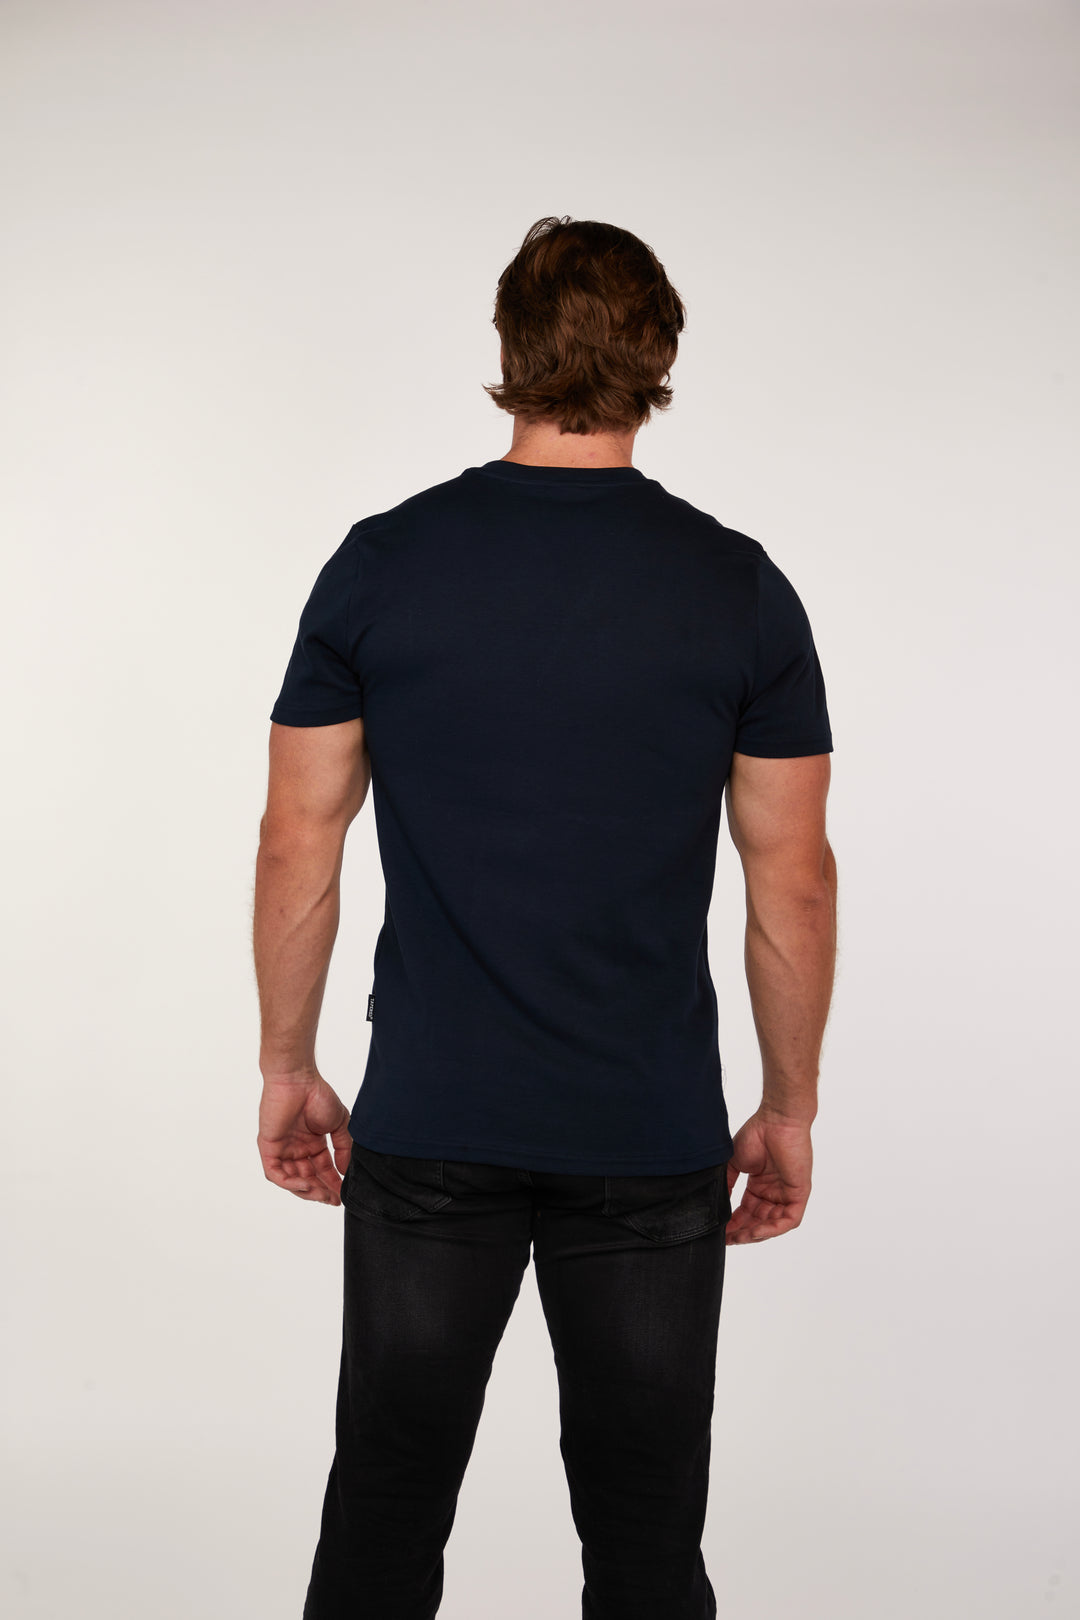 Navy V-Neck Tapered Fit T-Shirt, V-Neck Muscle Fit